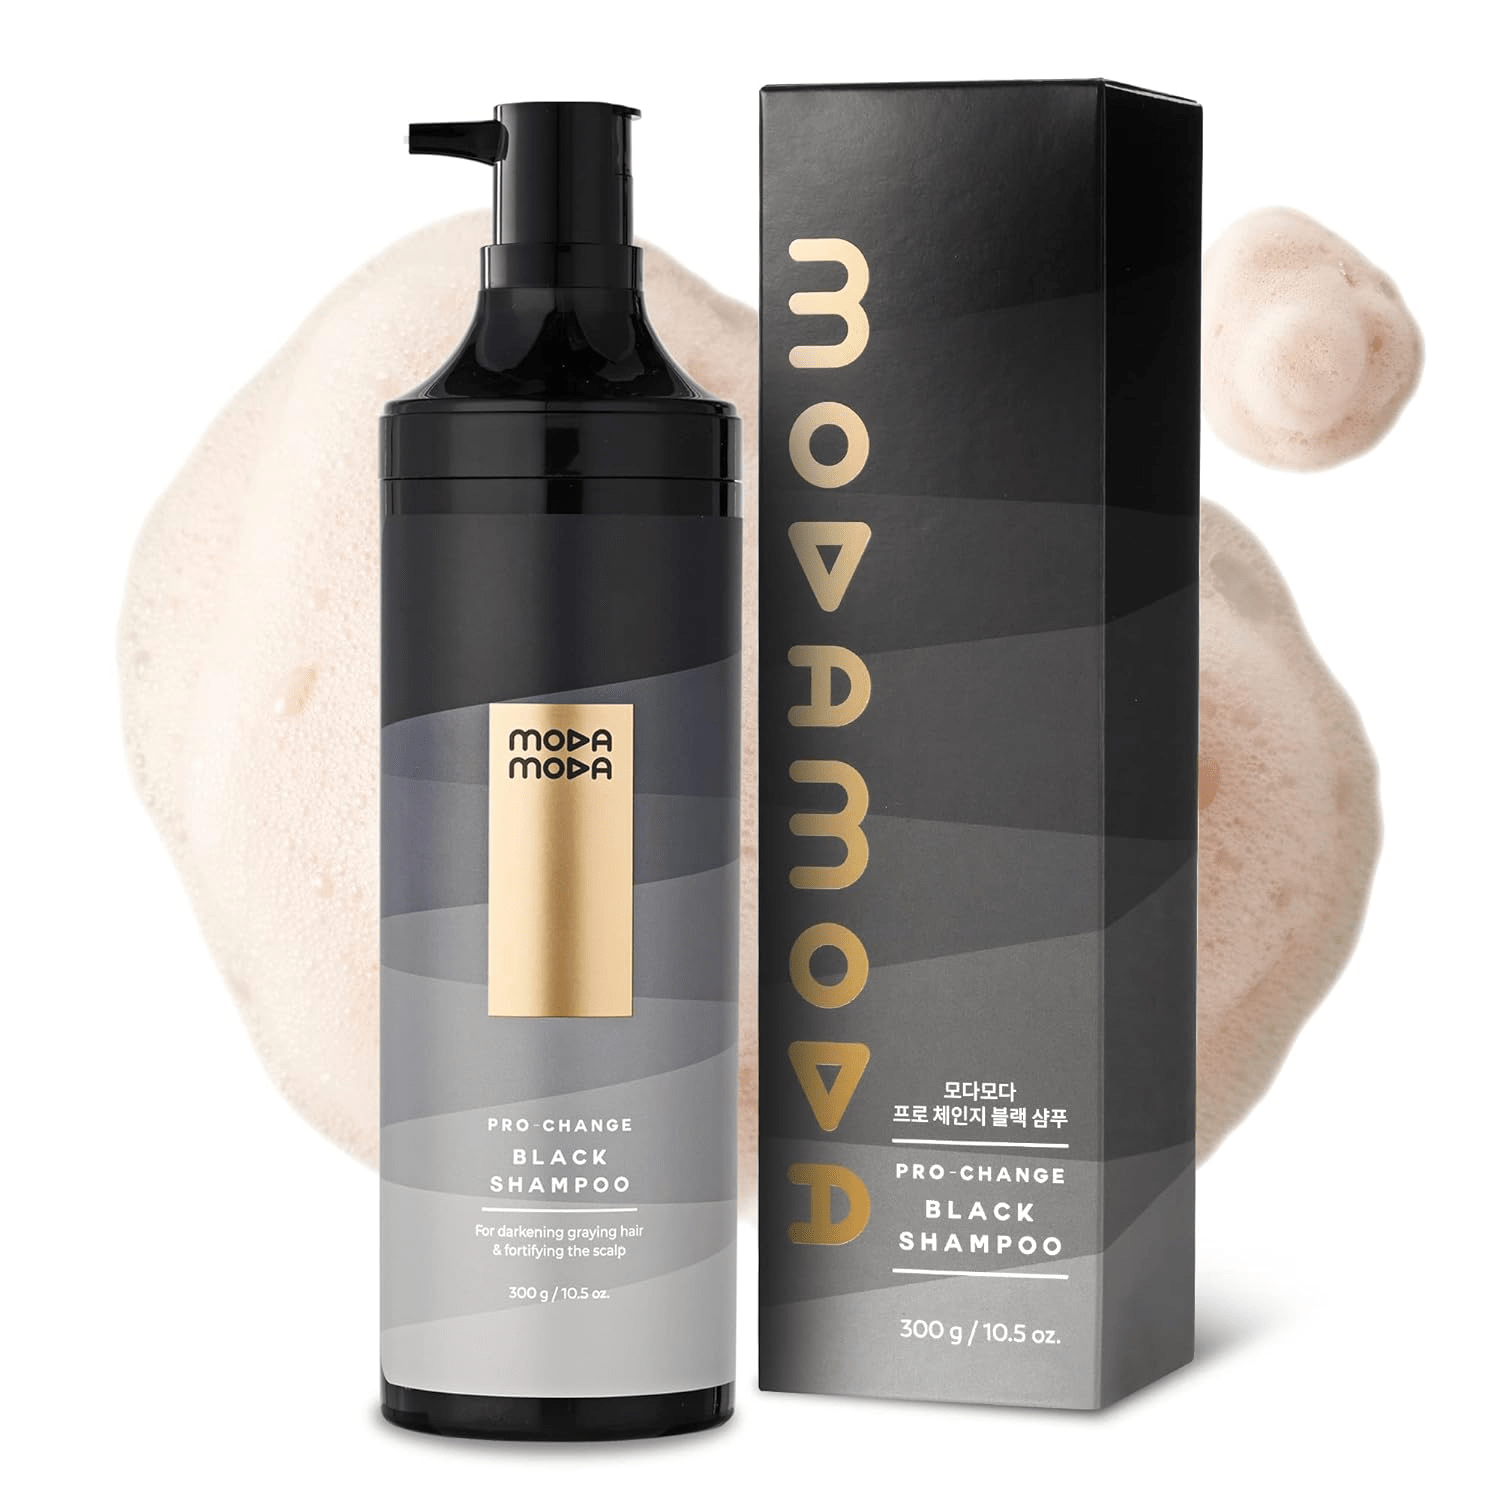 skincare-kbeauty-glowtime-moda moda pro change black shampoo